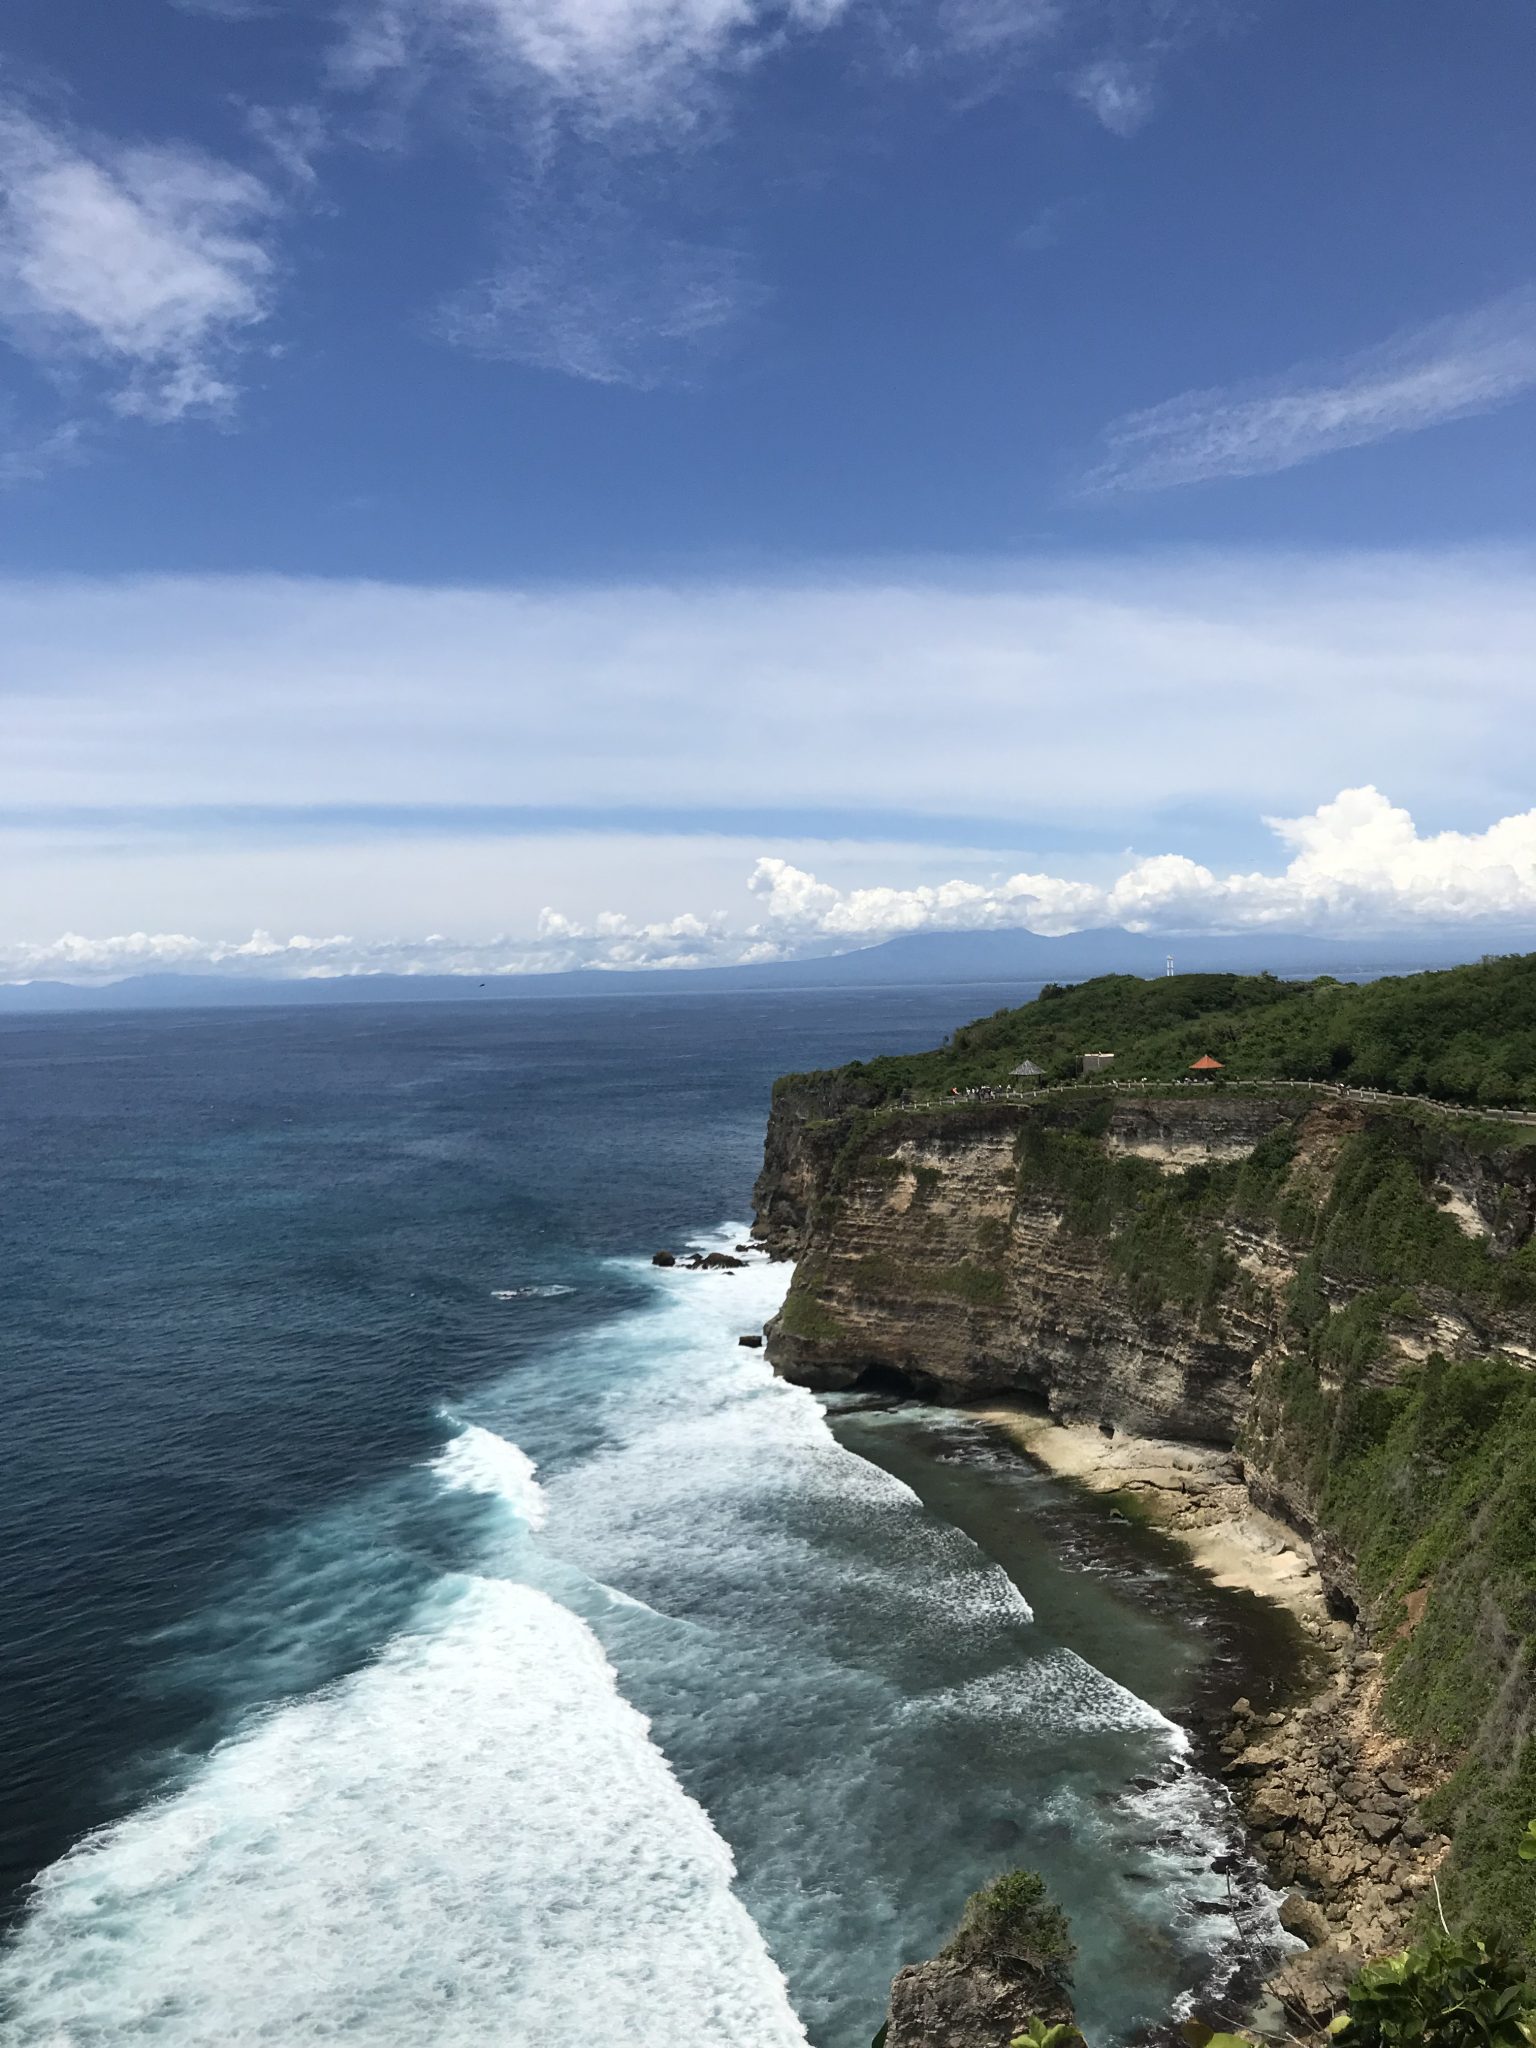 Beach view, Bali, Indonesia